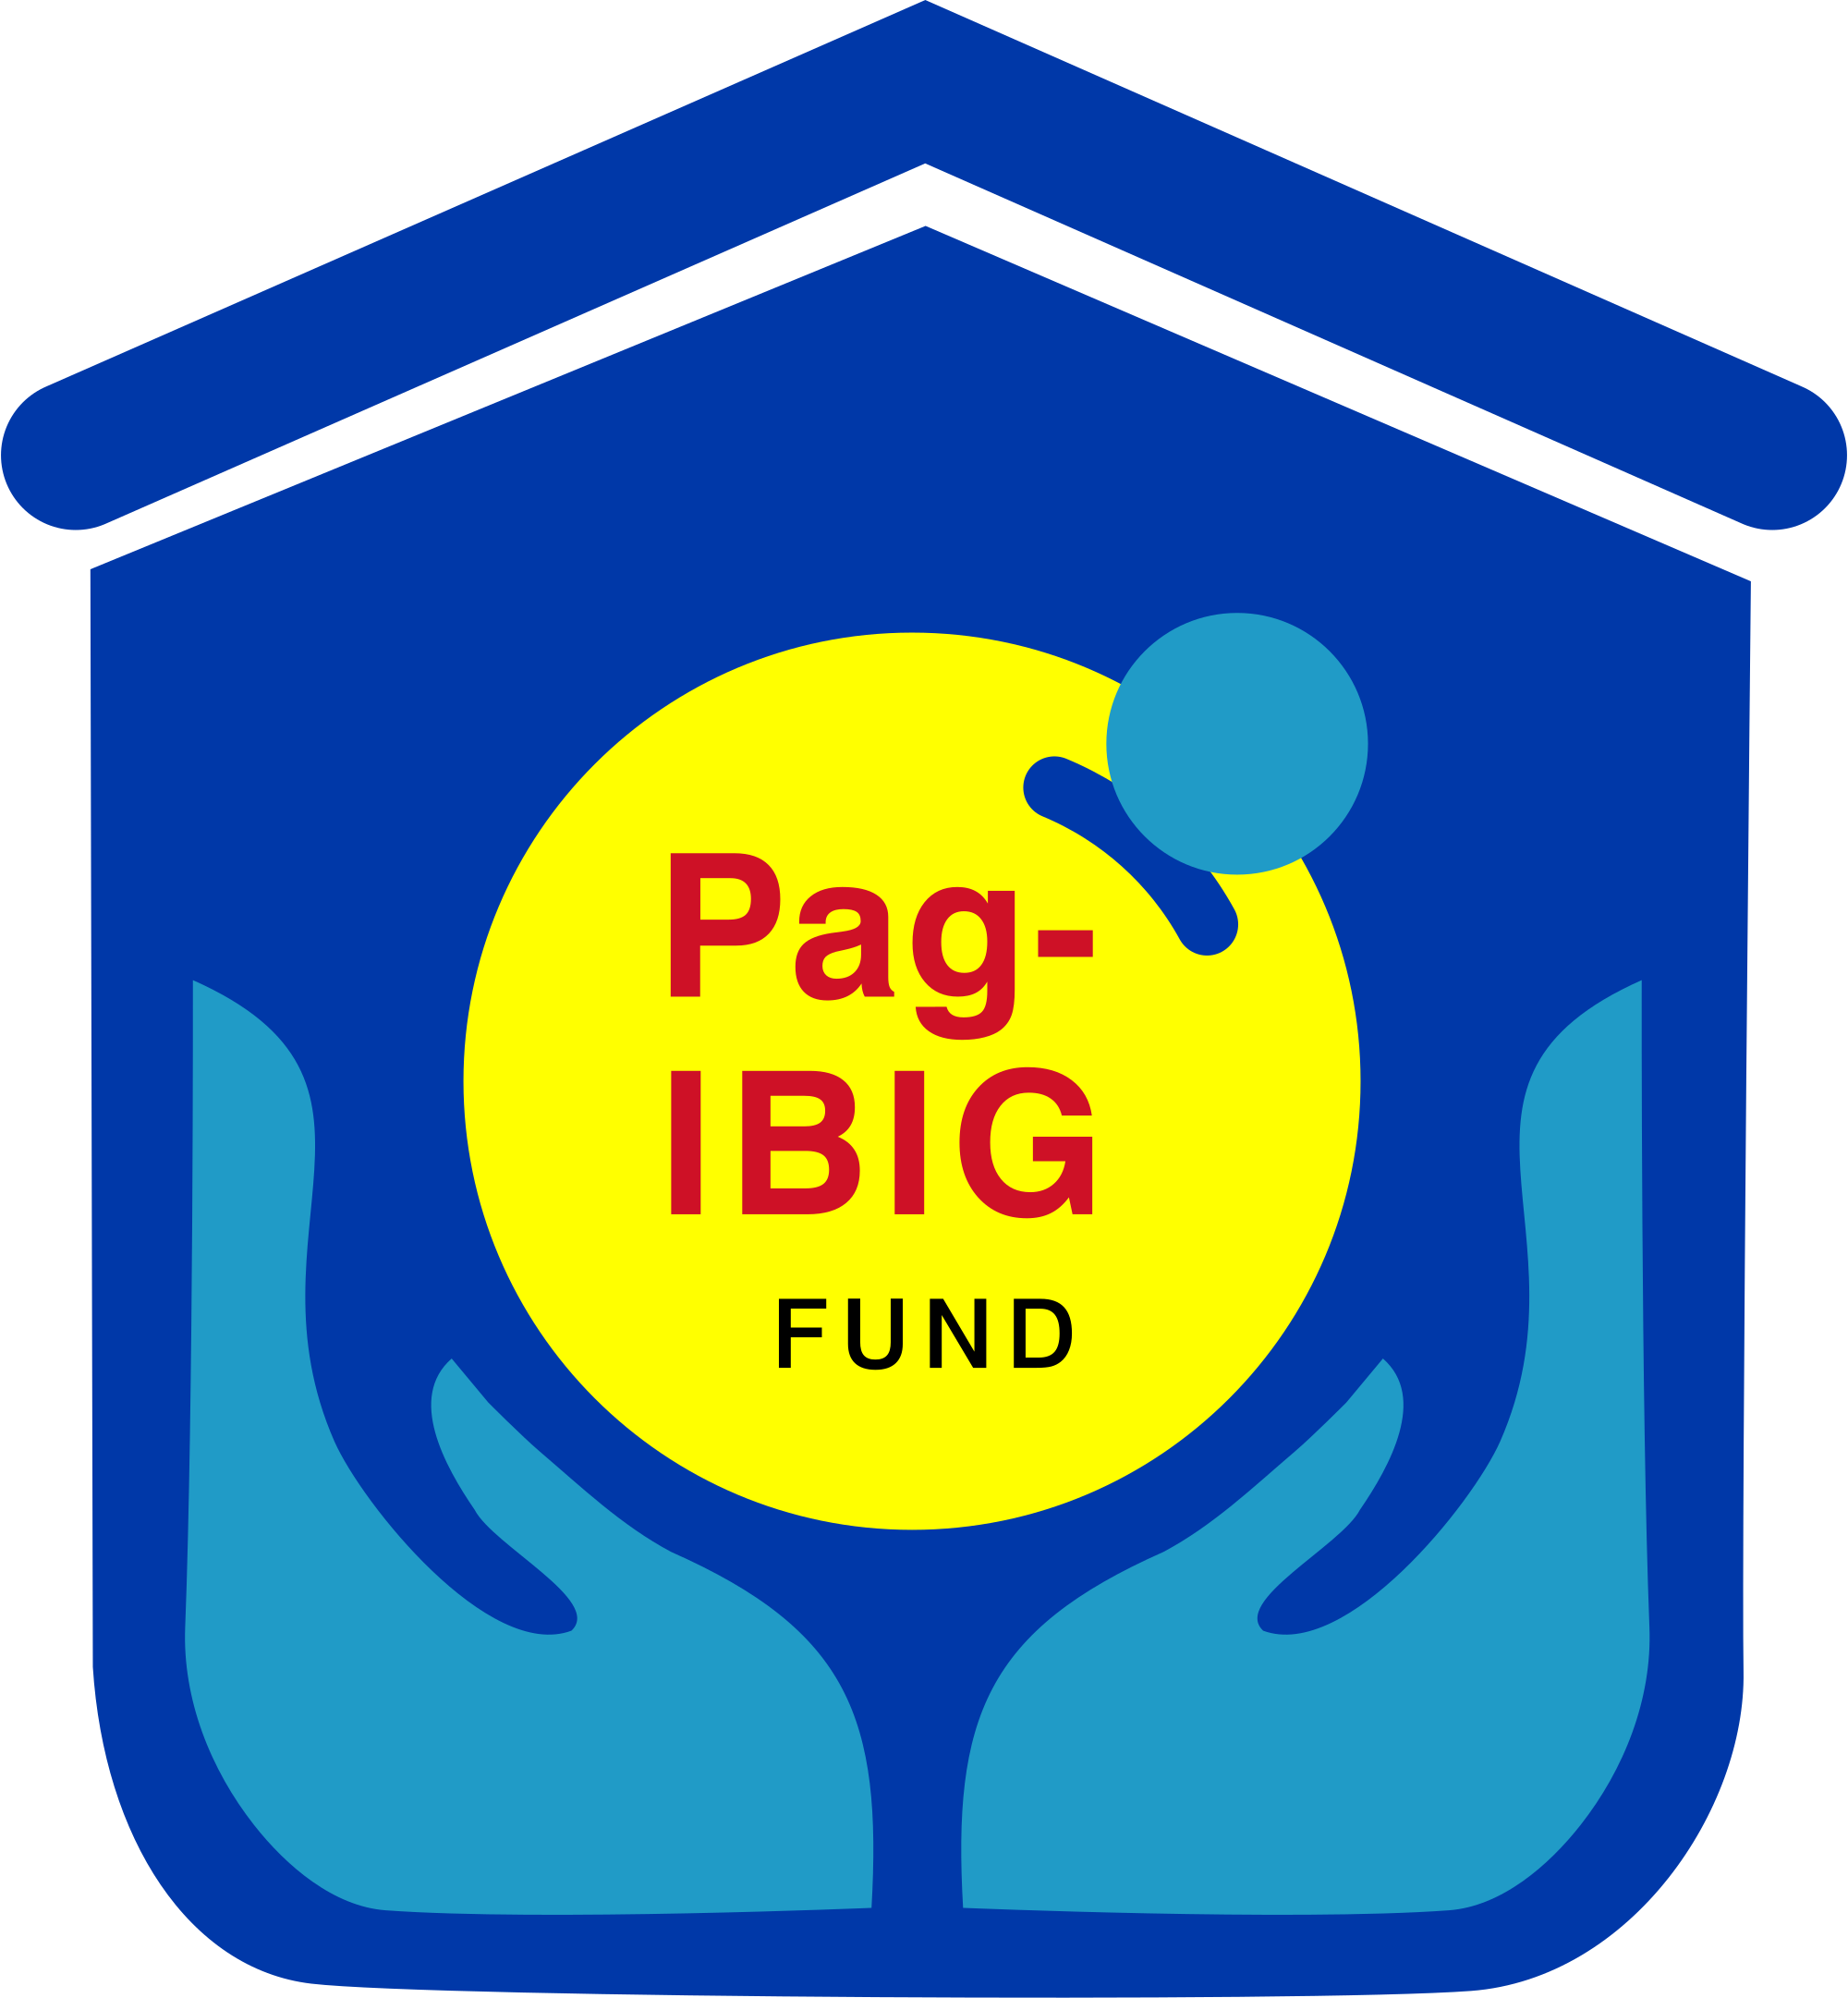 Pag-IBIG Fund - Wikipedia